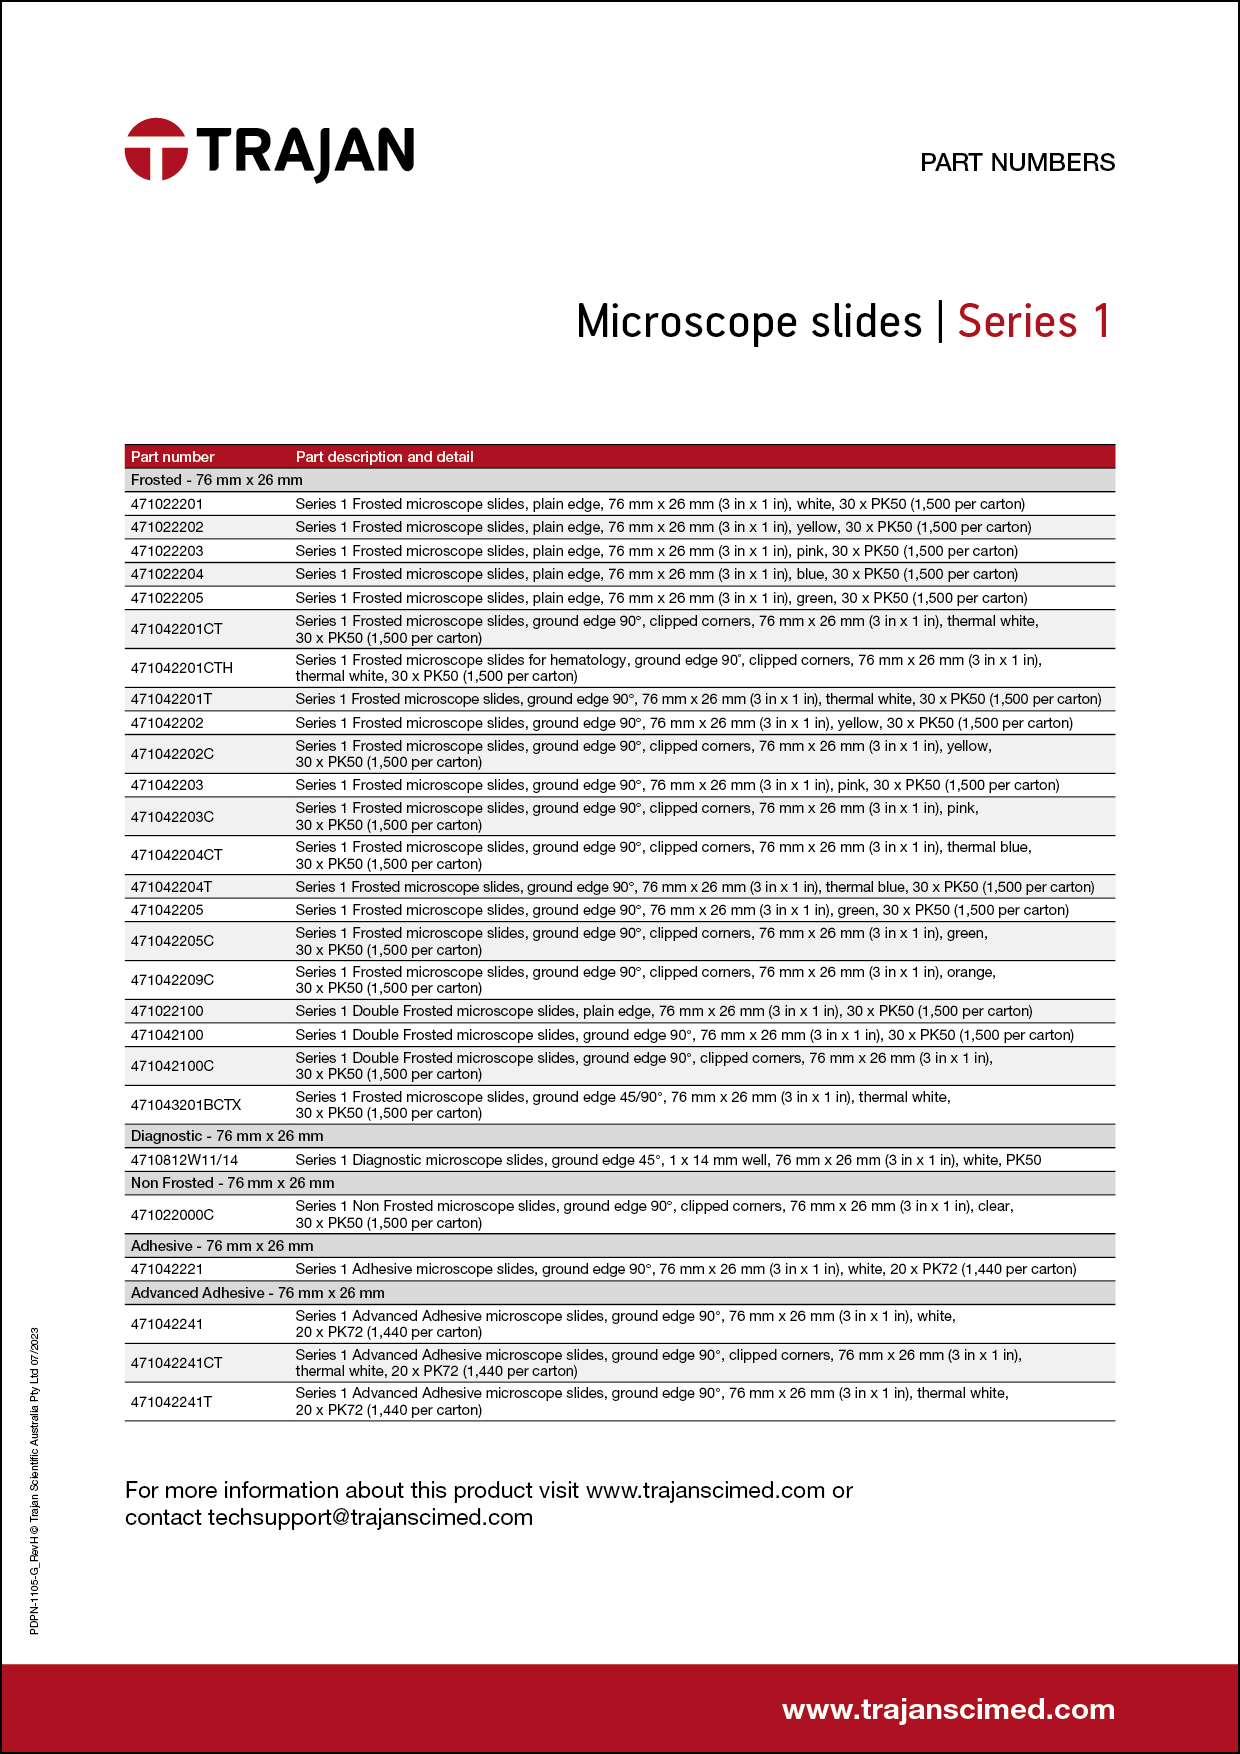 Part Number List - Series 1 microscope slides